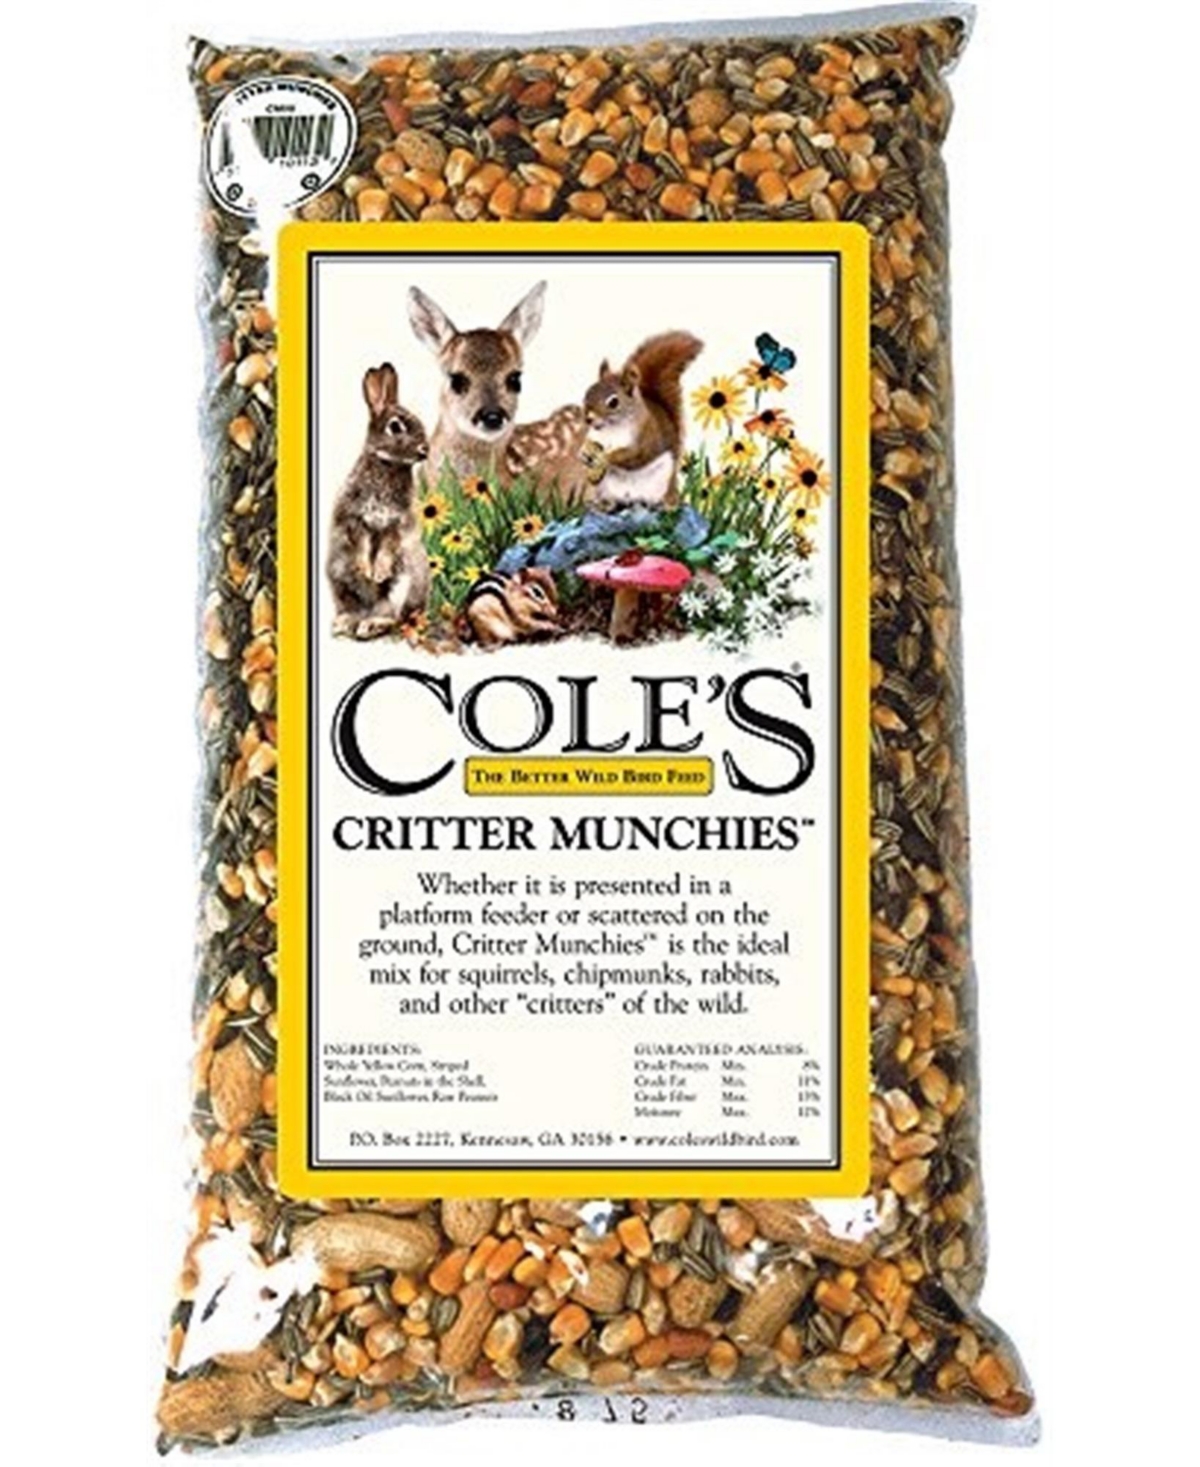 CM20 Critter Munchies Wild Animal Food, 20-Pound Bag - Multi